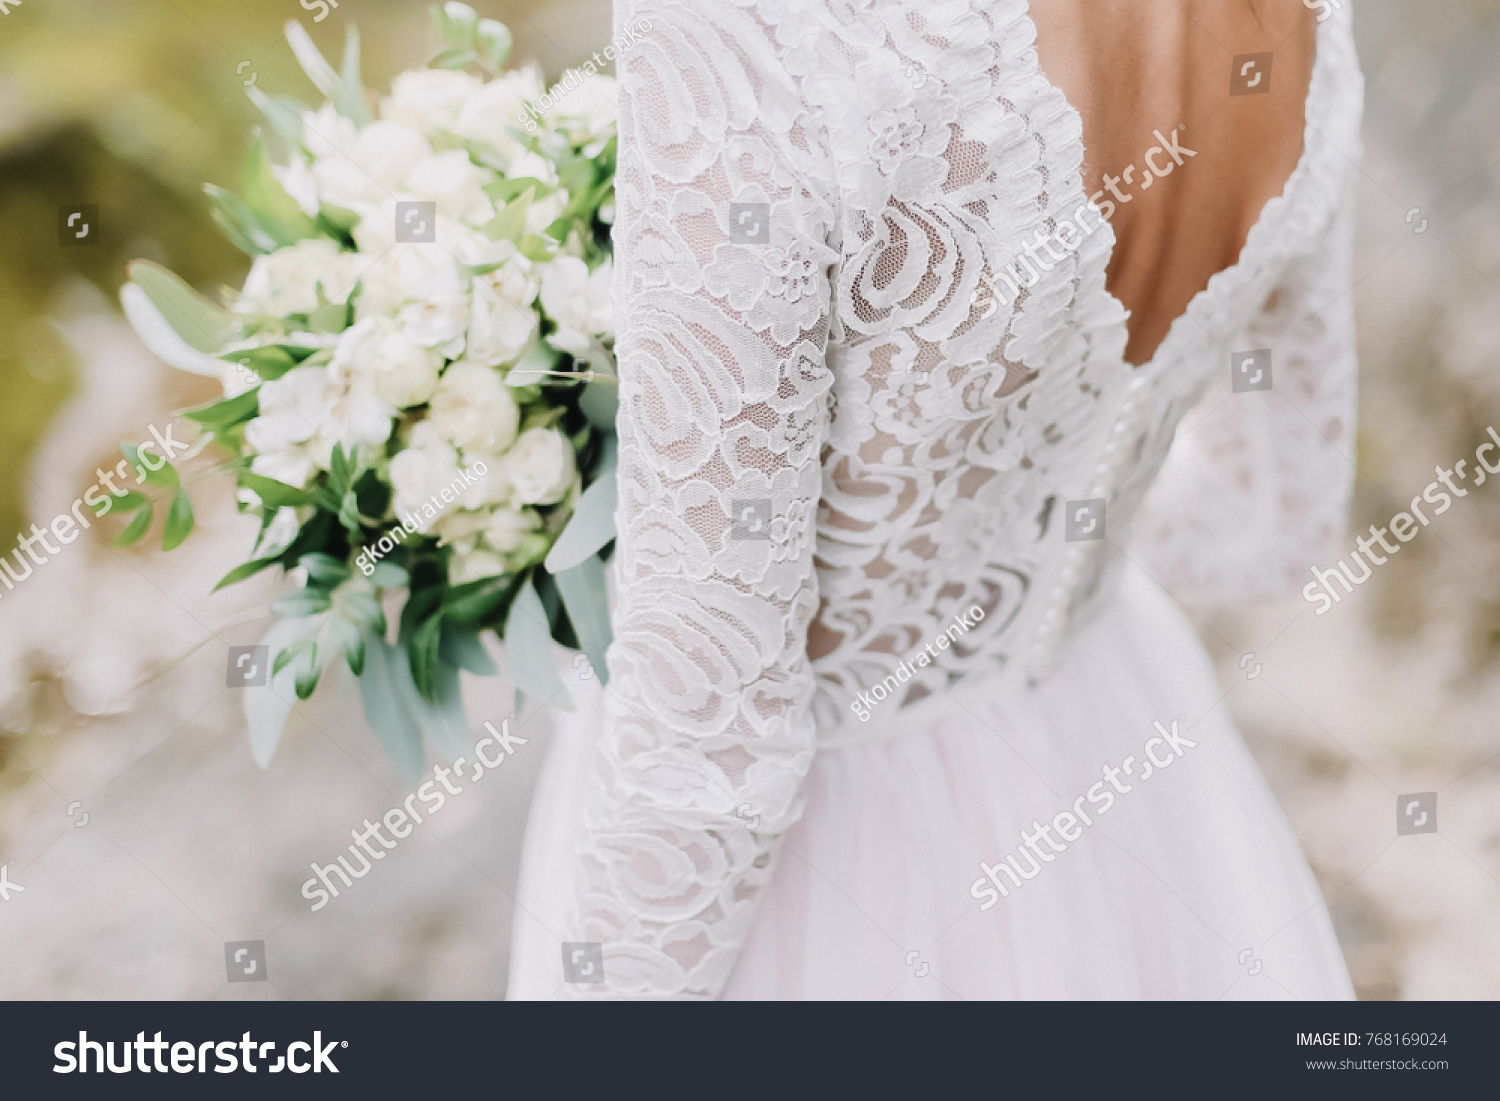 Bride holds a wedding bouquet, wedding dress, wedding details #768169024